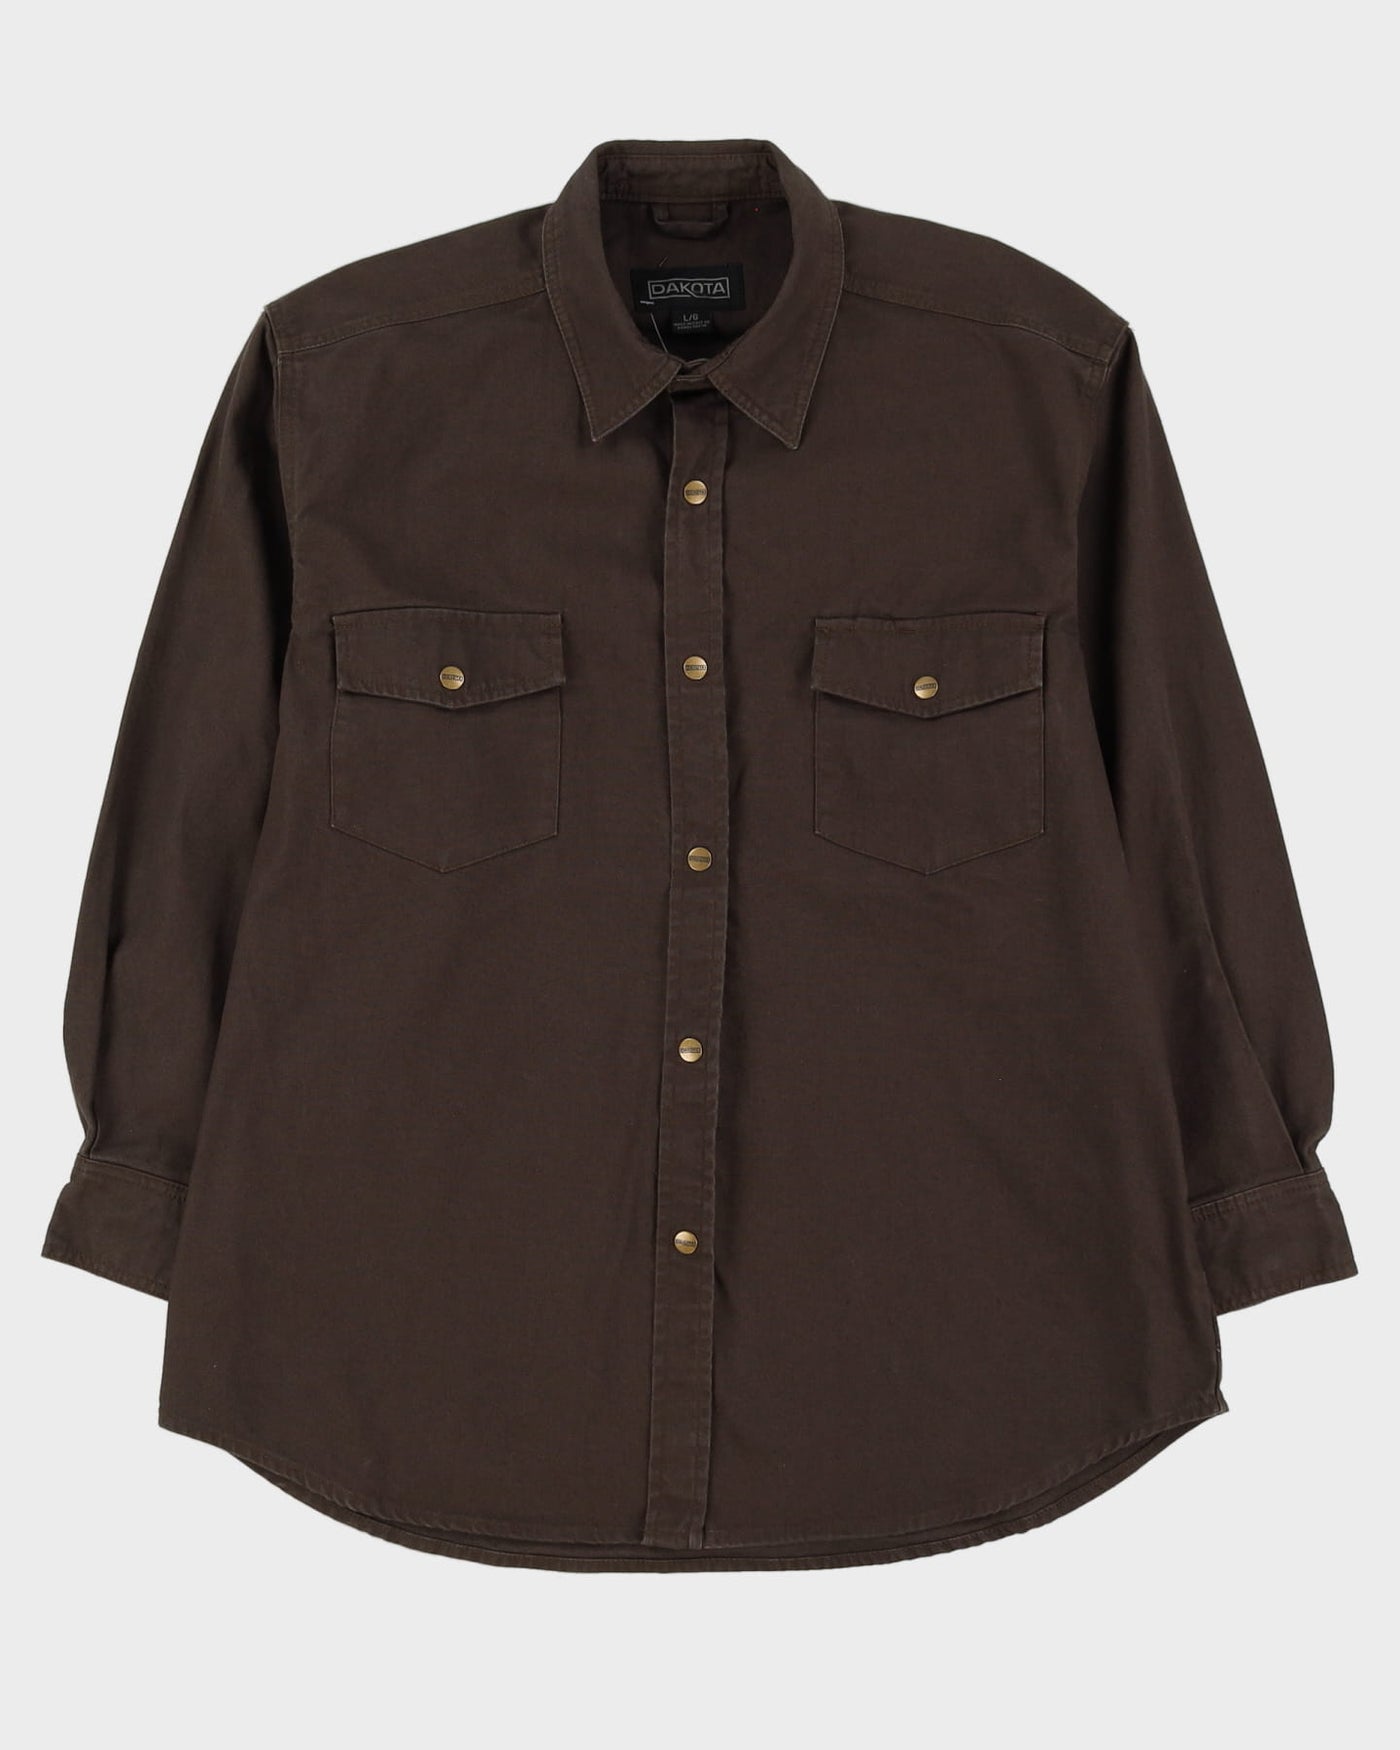 00s Dakota Brown Work Shirt - L / XL